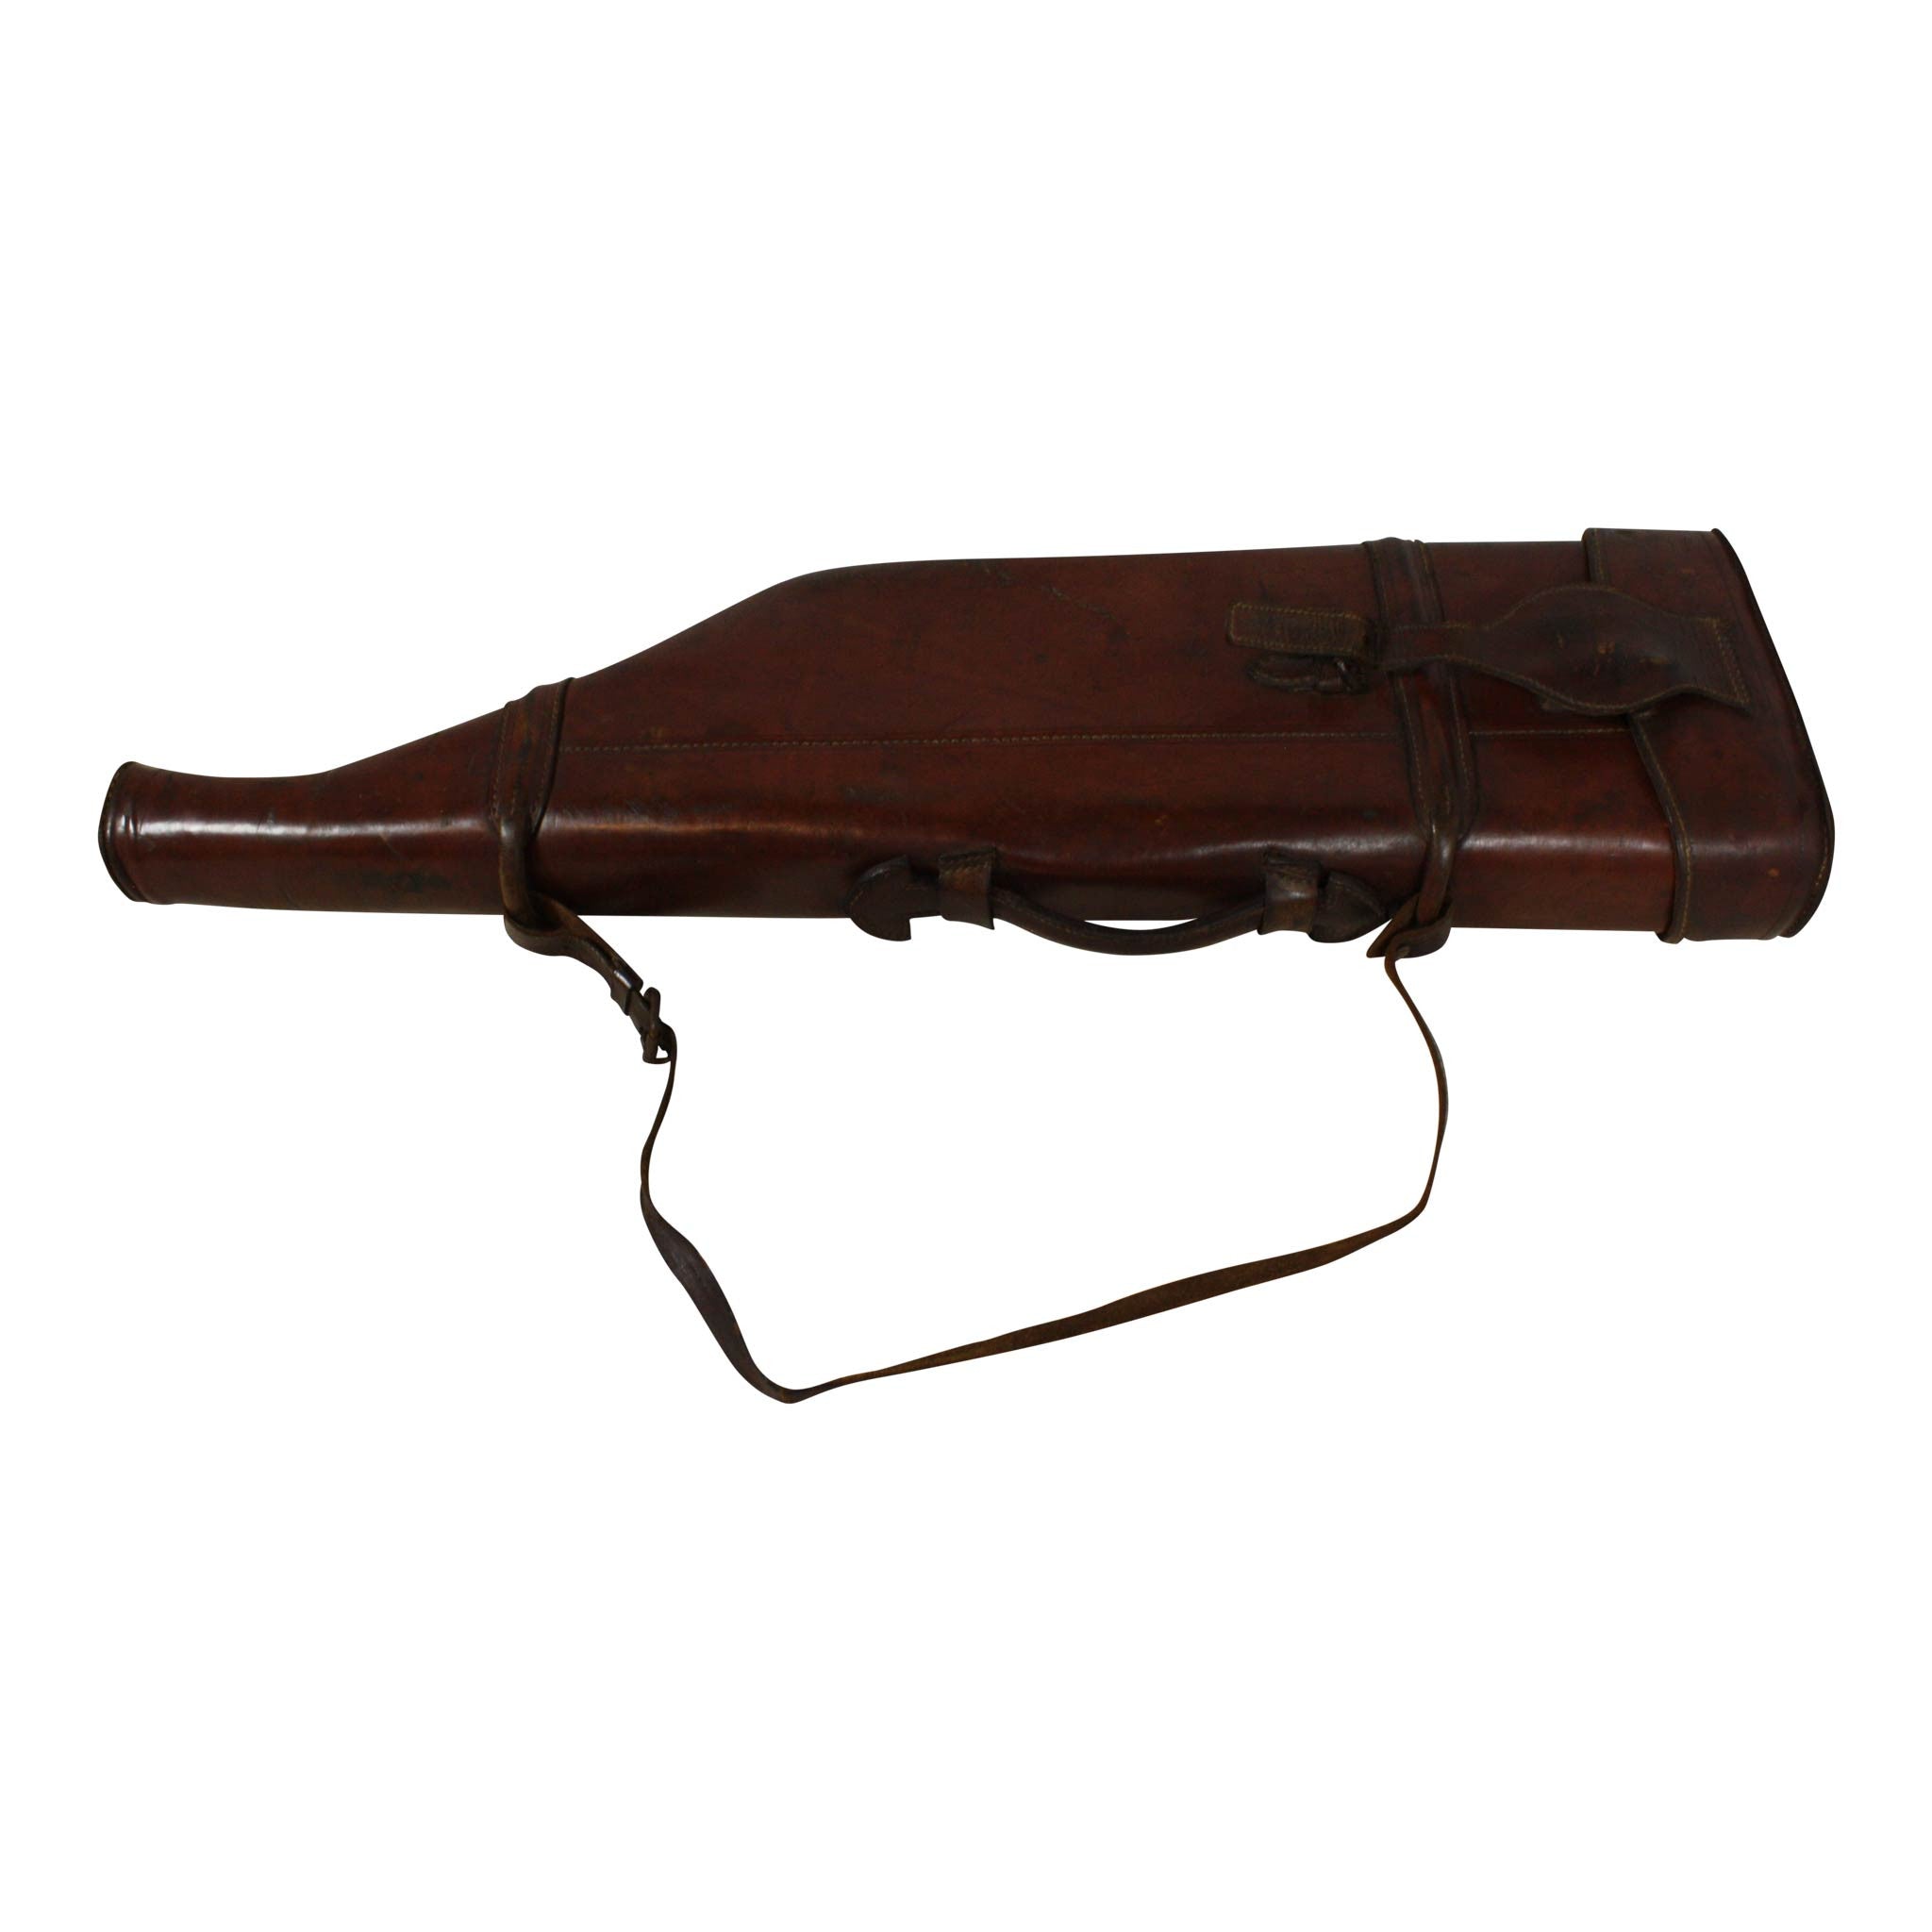 Hard Leather Gun Case